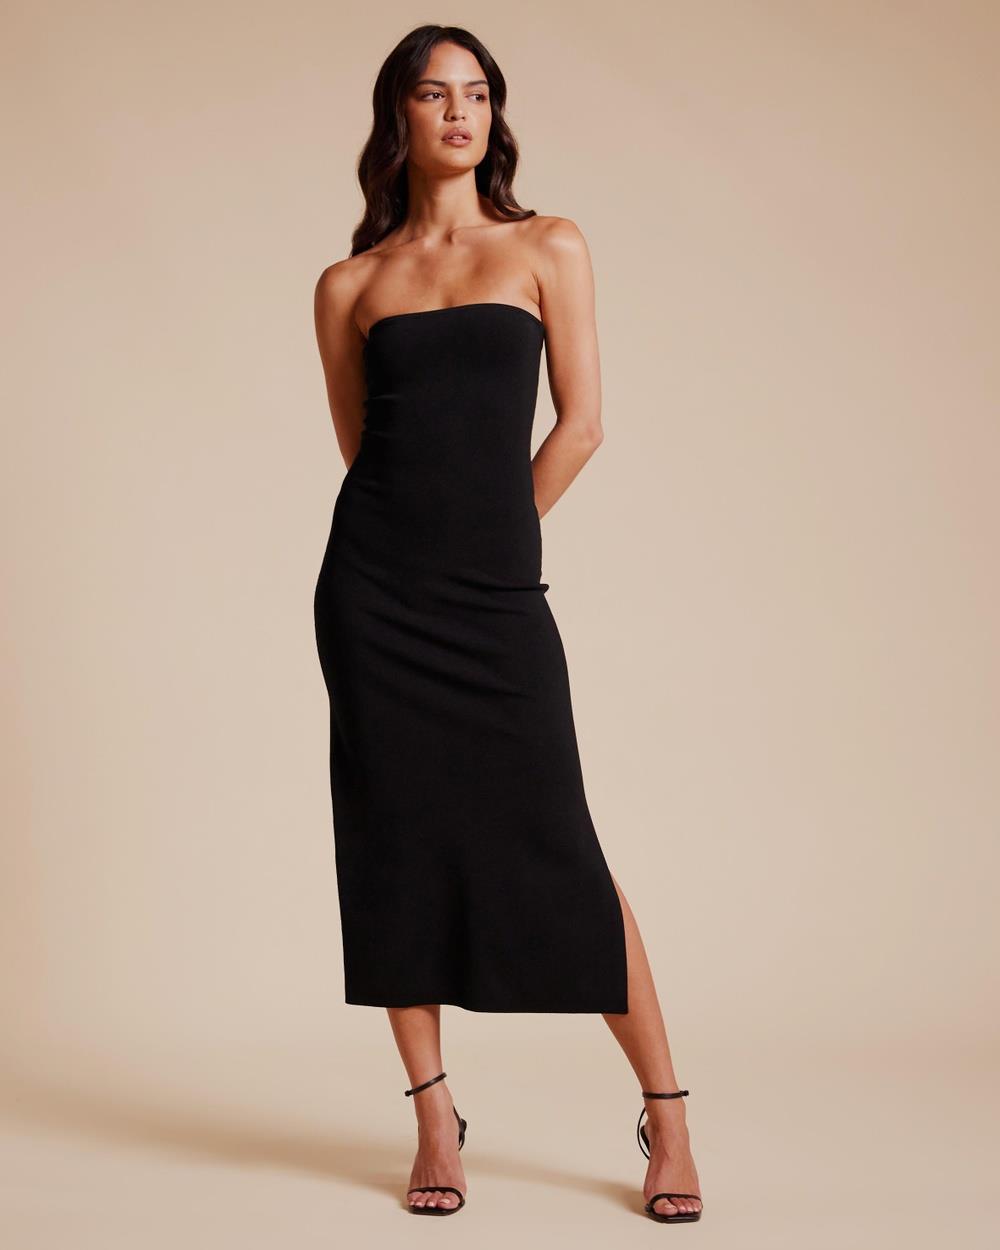 Minima Esenciales - Waylen Strapless Knit Dress - Bodycon Dresses (Black) Waylen Strapless Knit Dress